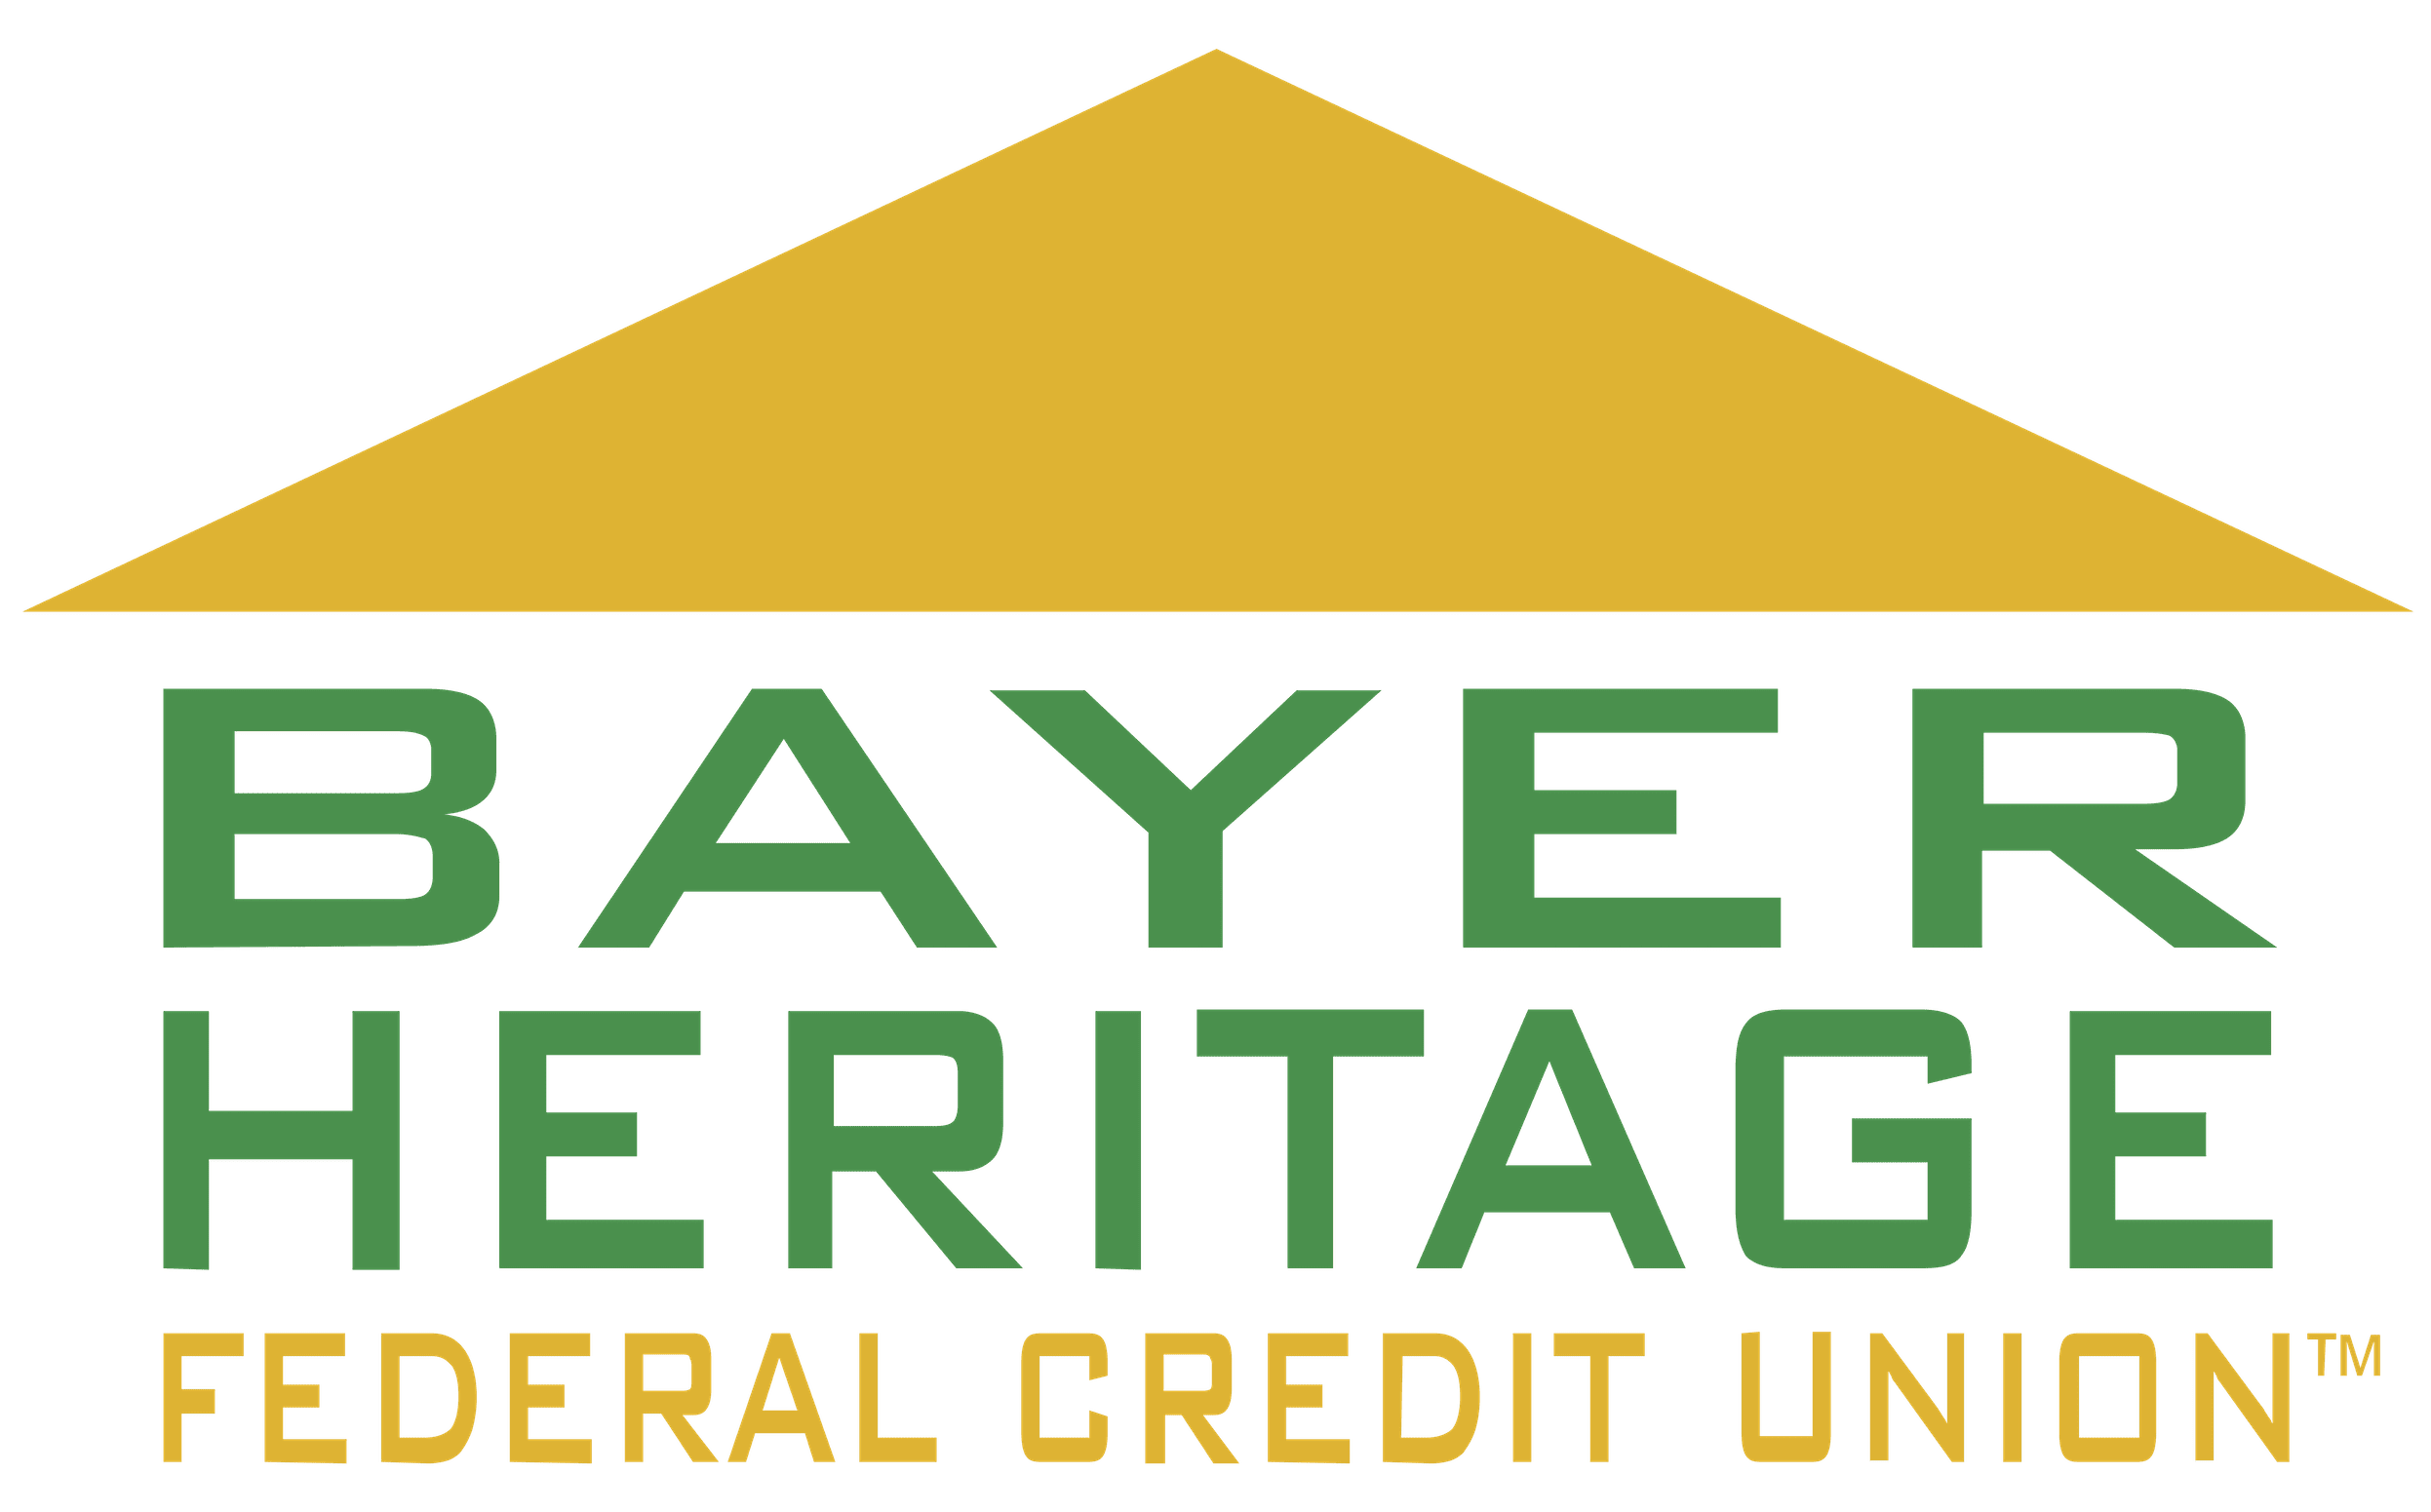 Bayer Heritage Credit Union